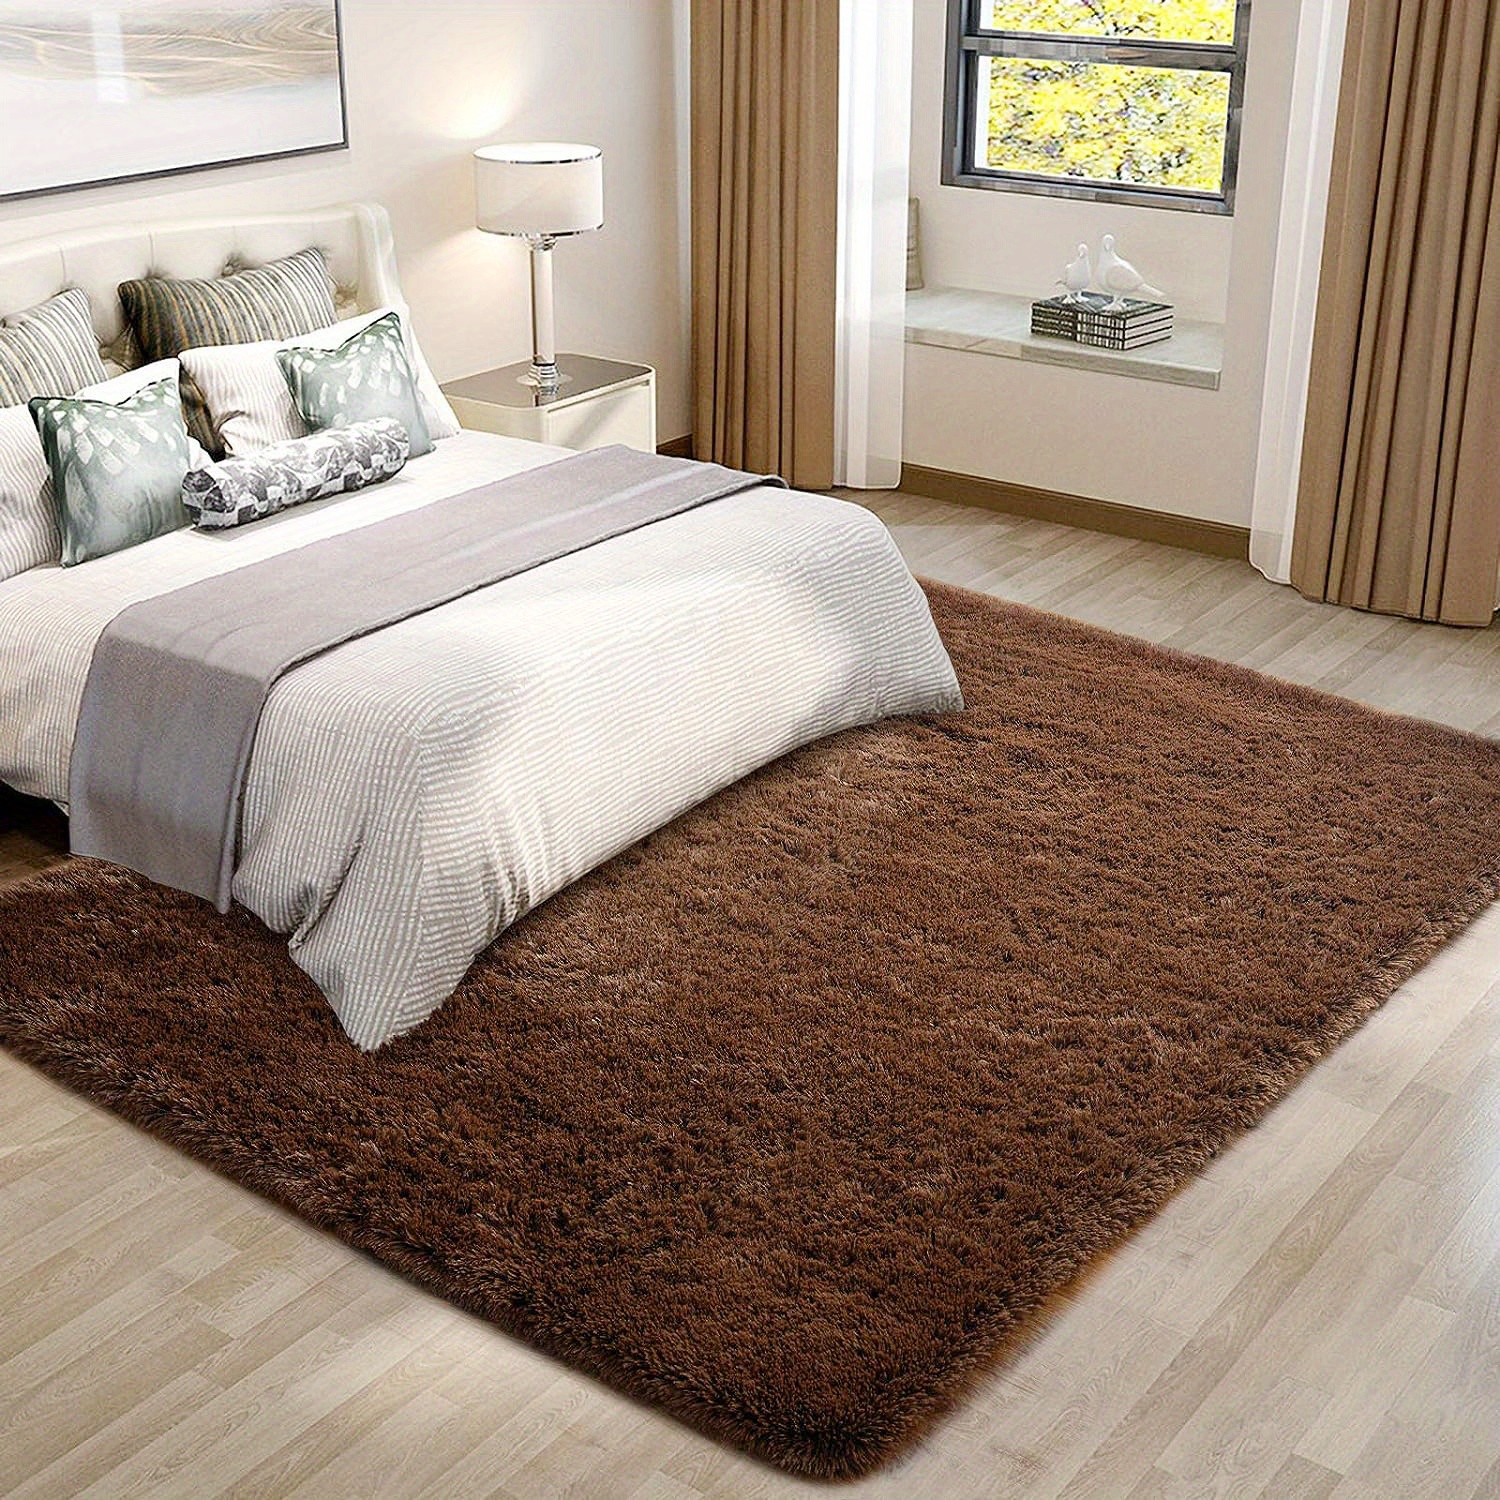 78.74 x 120.08 inch Soft Bedroom Rug, Plush Carpet Rug for Living Room,  Fluffy Area Rug for Kids Room Home Decor, Beige